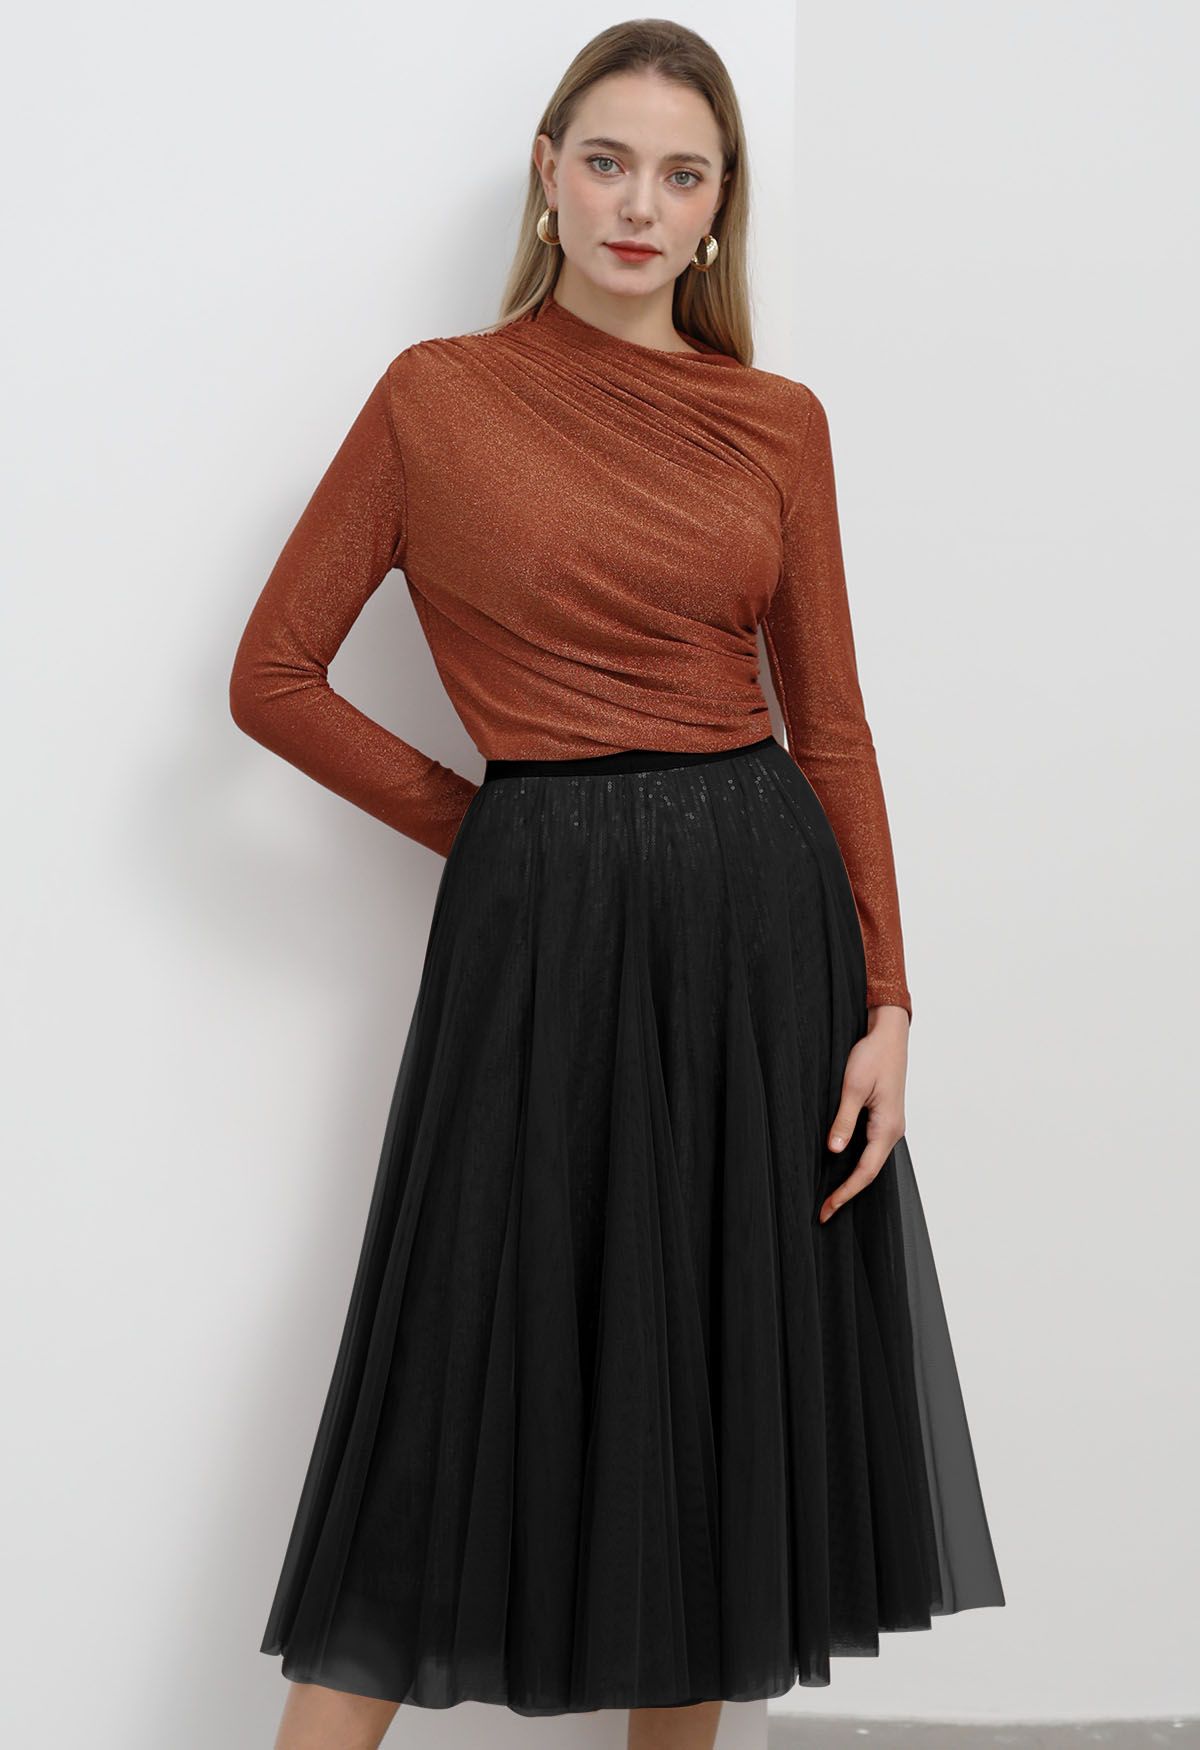 Ravishing Sequins Mesh Tulle Midi Skirt in Black - Retro, Indie and ...